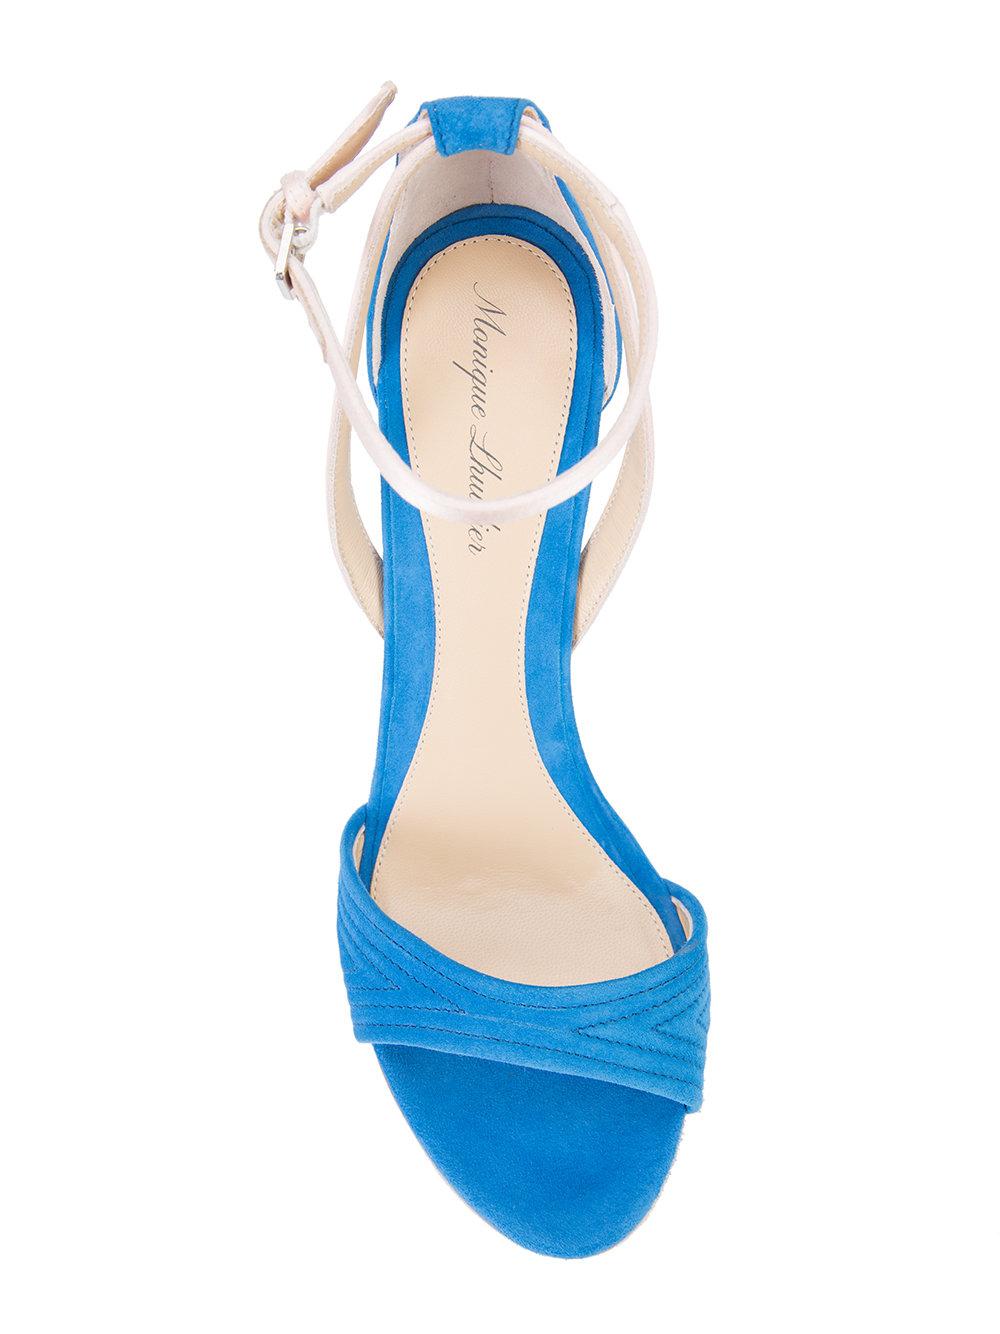 Monique lhuillier Clear Heel Sandals in Blue | Lyst